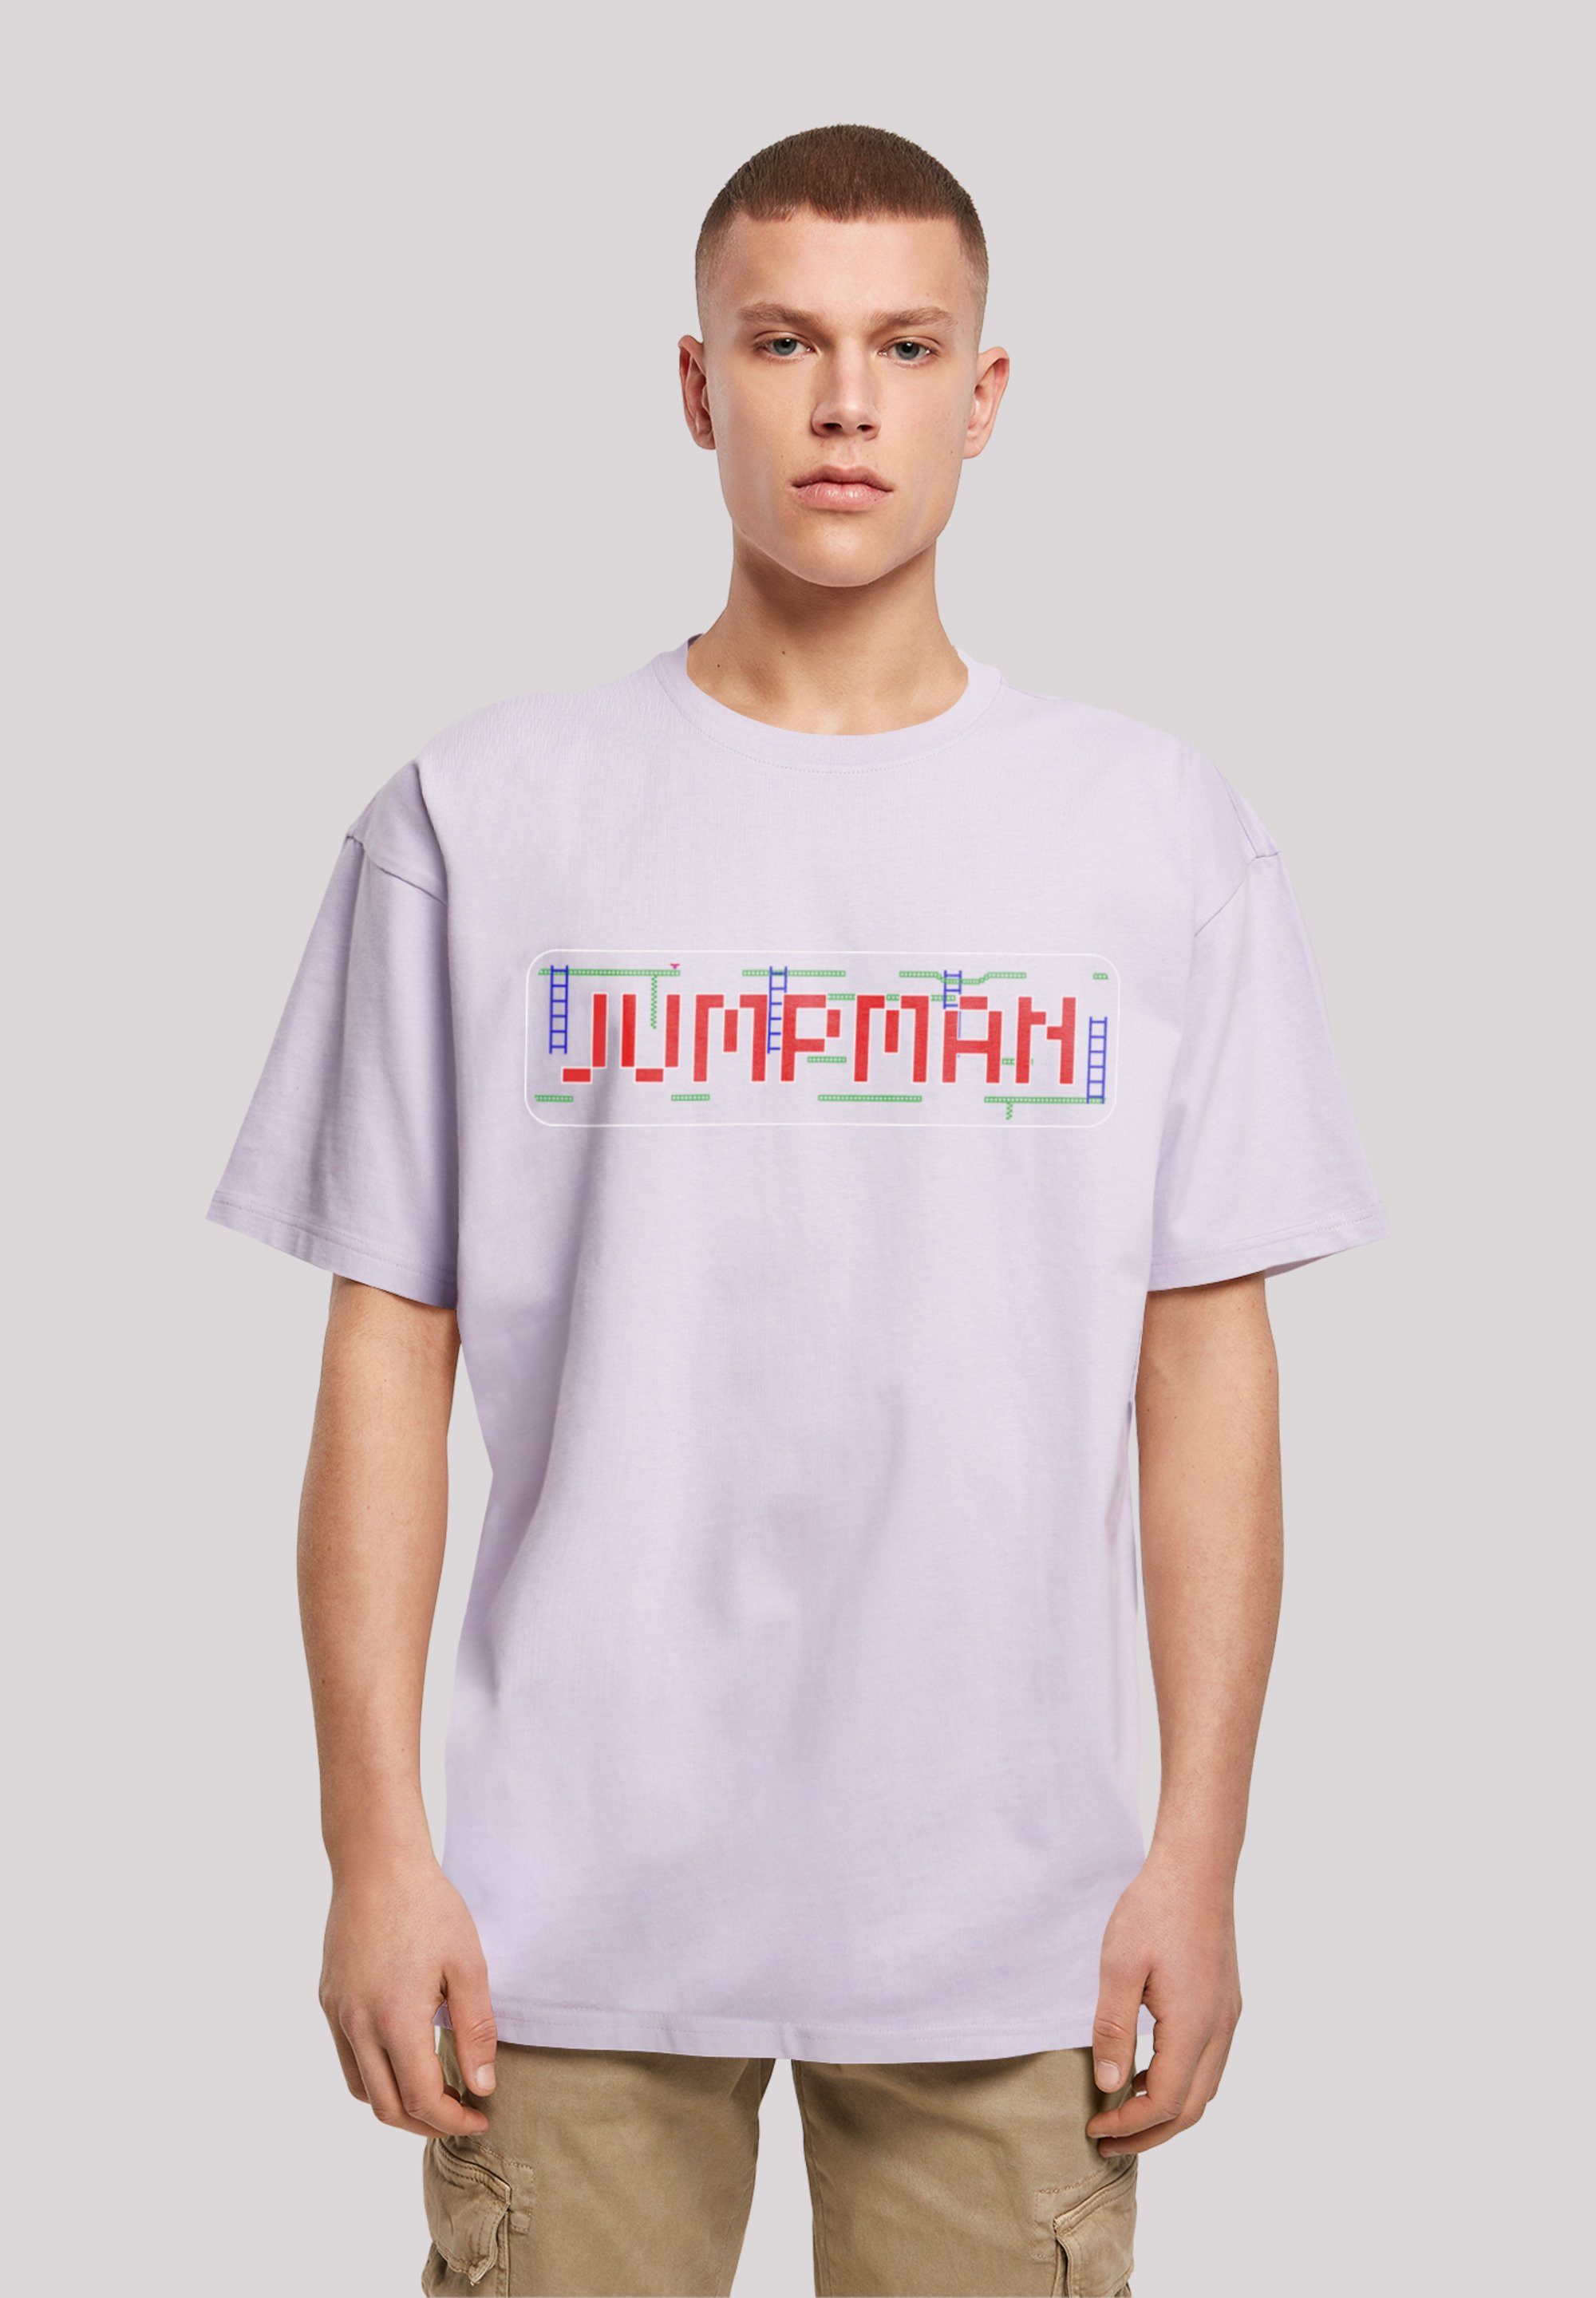 F4NT4STIC T-Shirt Jumpman C64 Retro Gaming SEVENSQUARED Print lilac